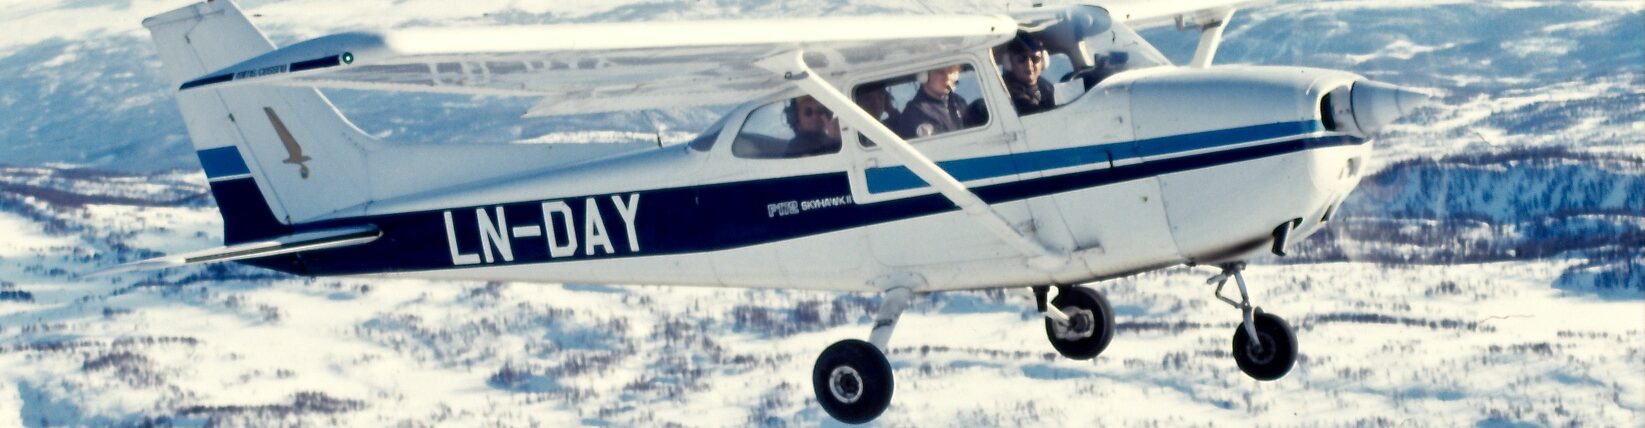 Bardufoss flyklubb